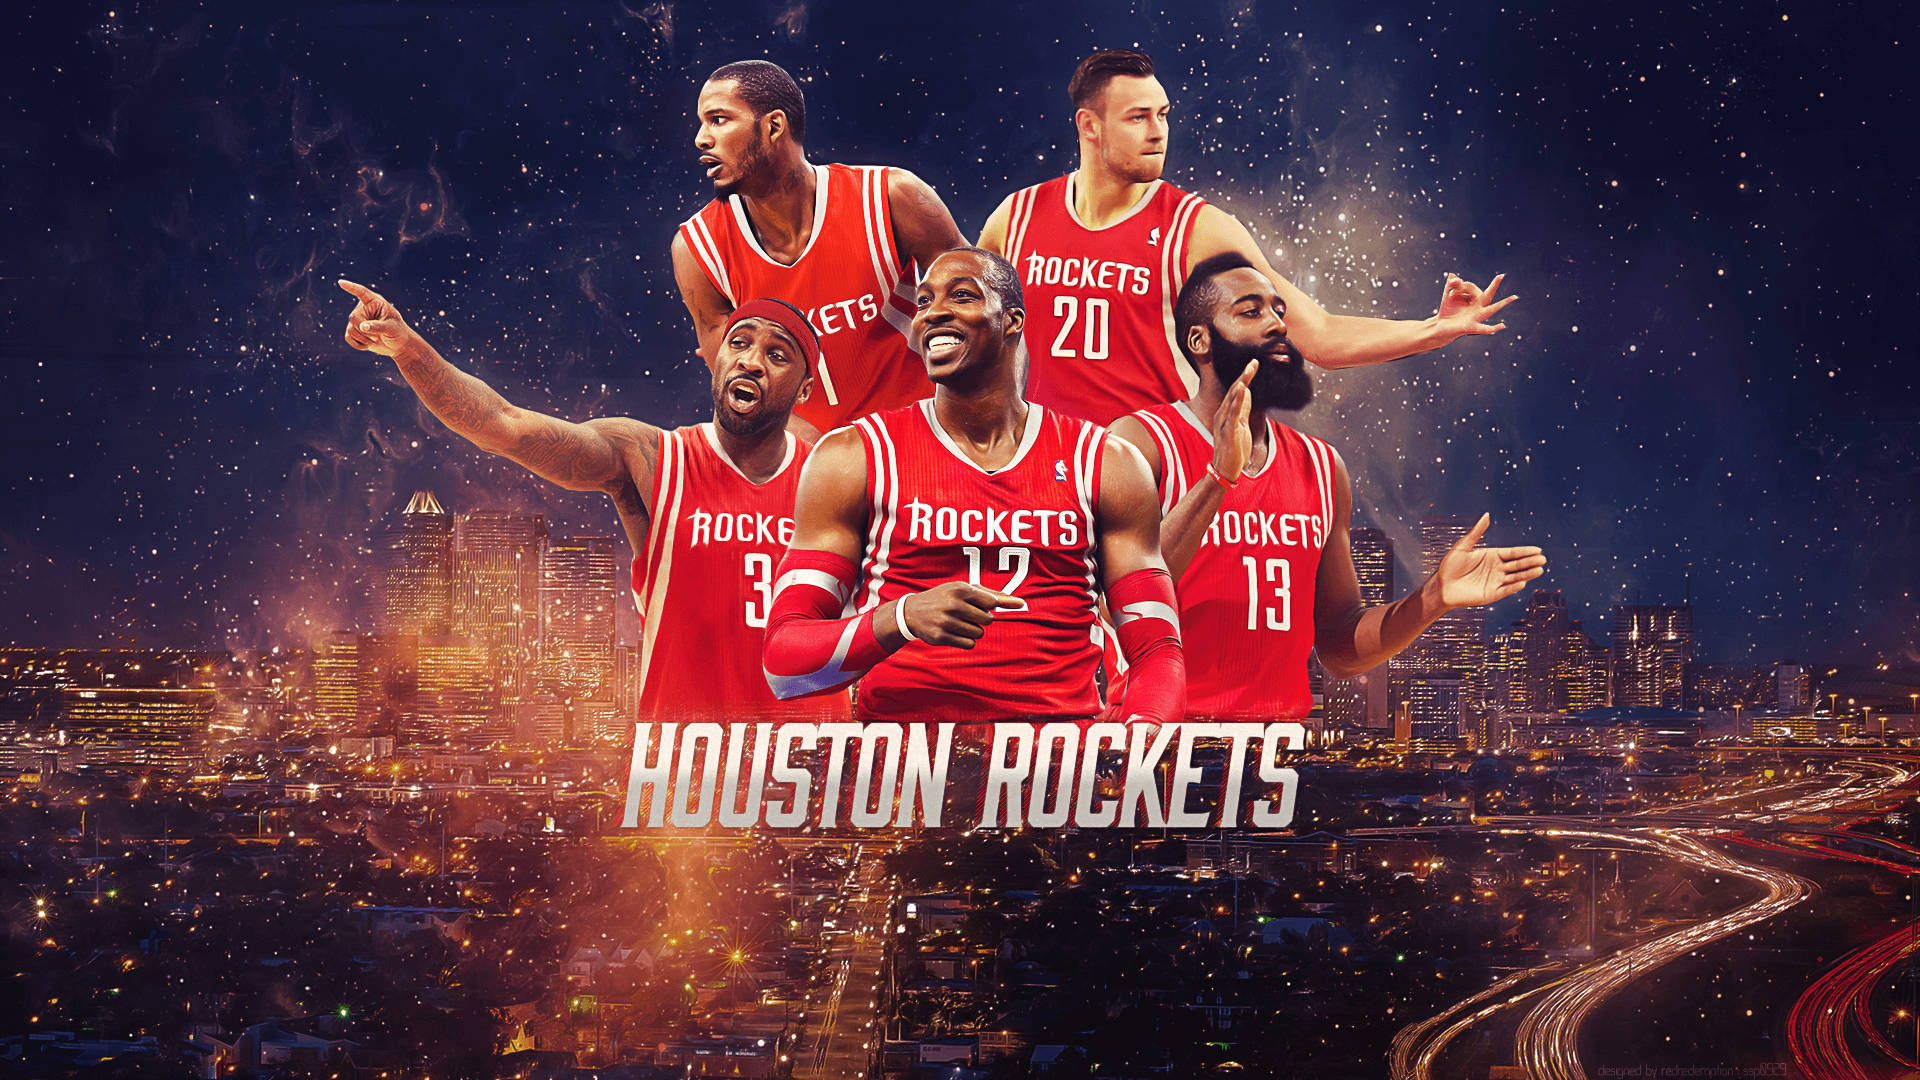 Houston Rockets Basketball Team Background